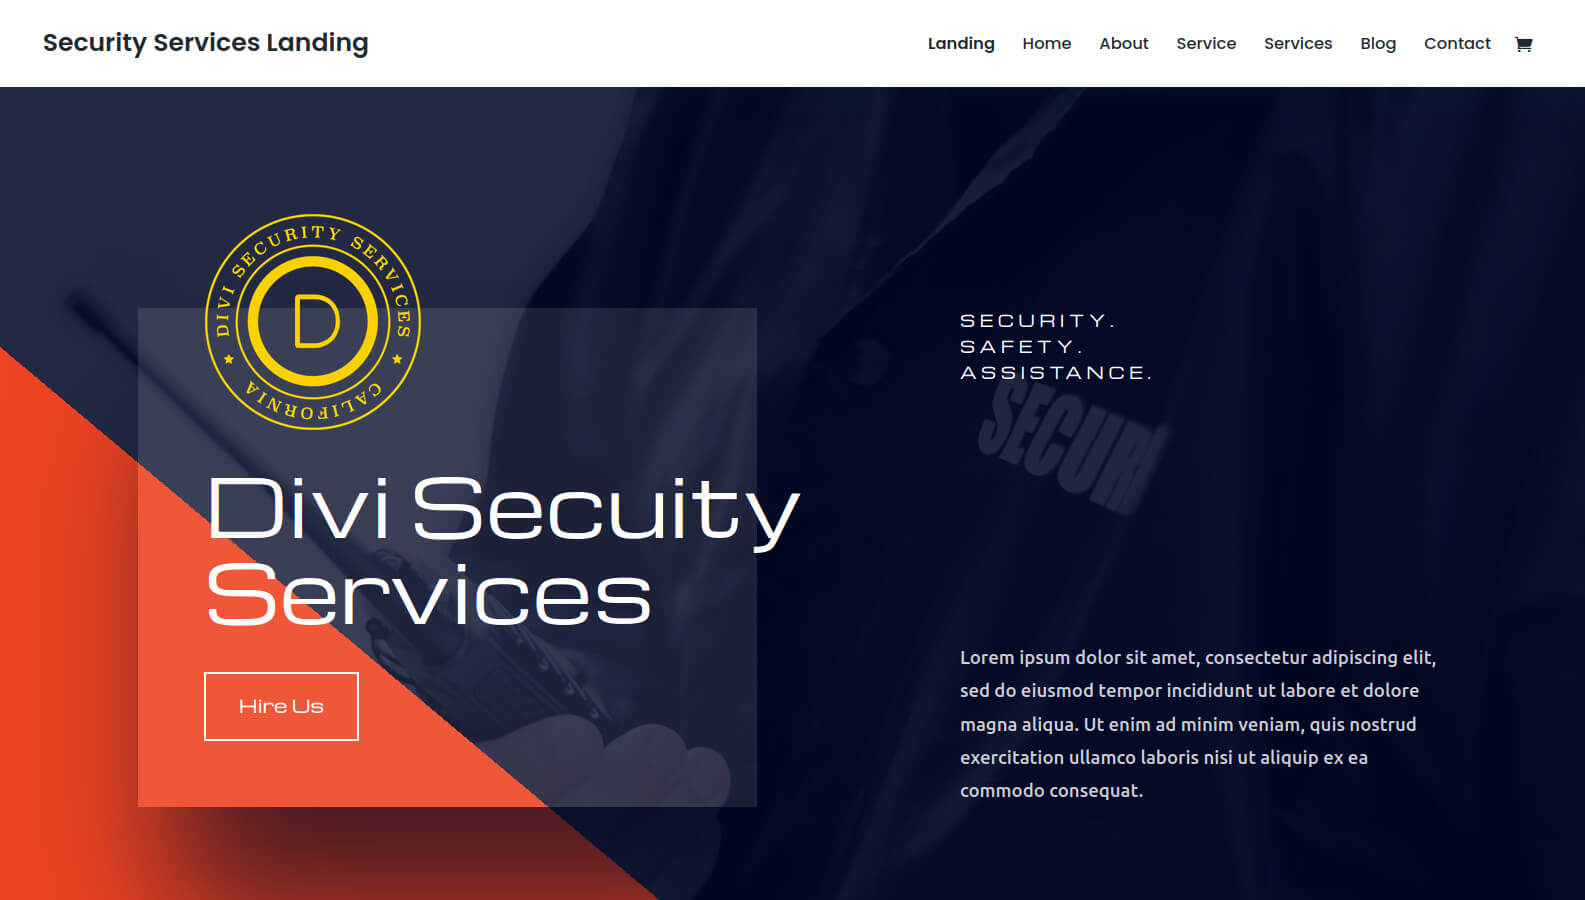 Security services website